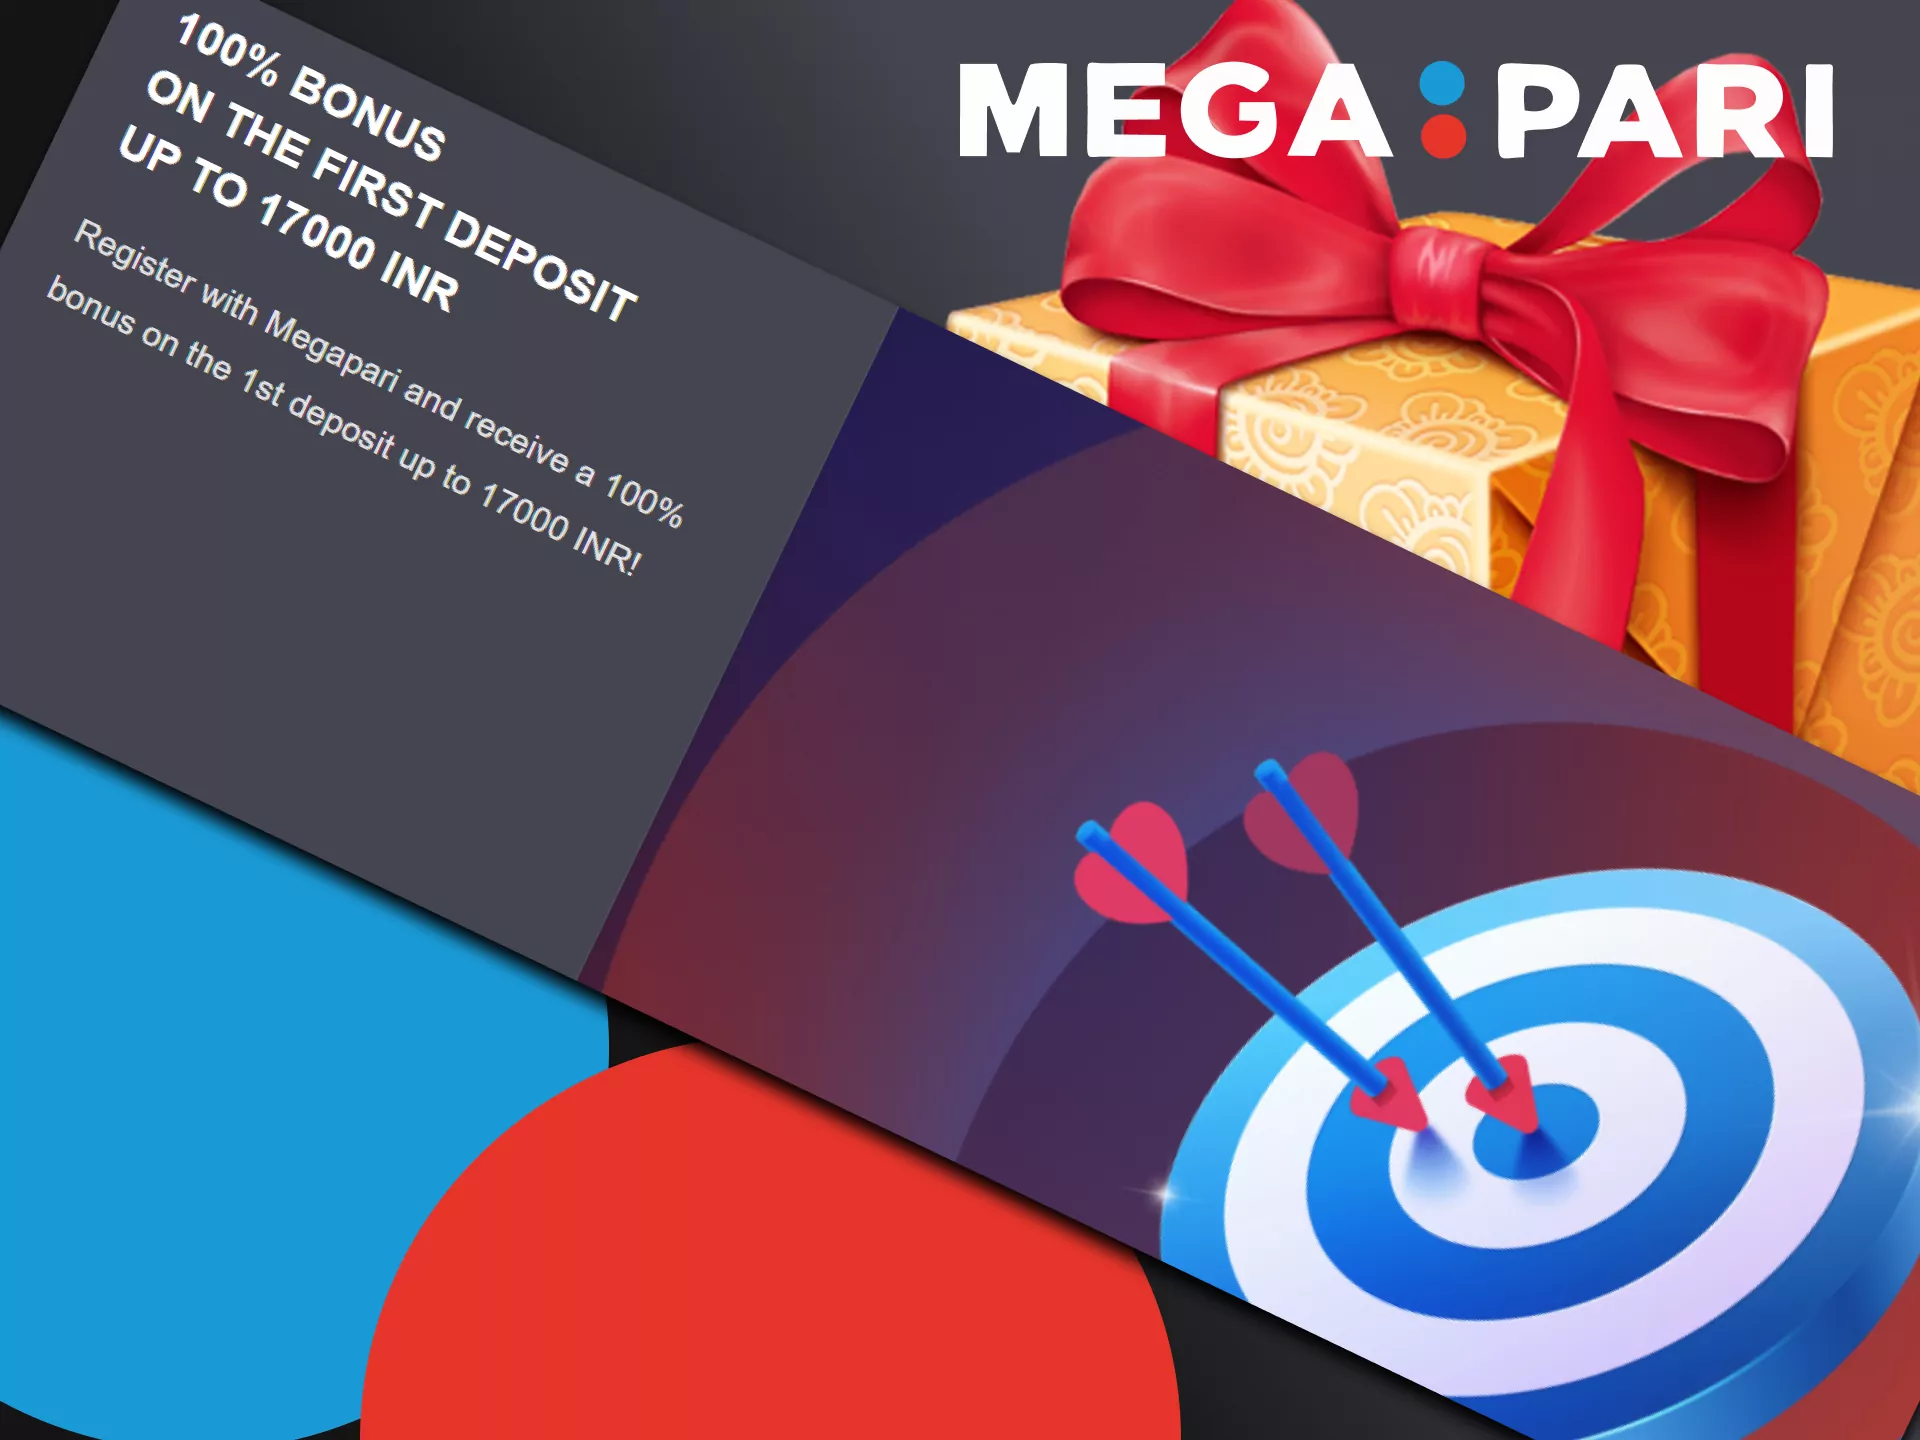 Get a special bonus from Megapari.